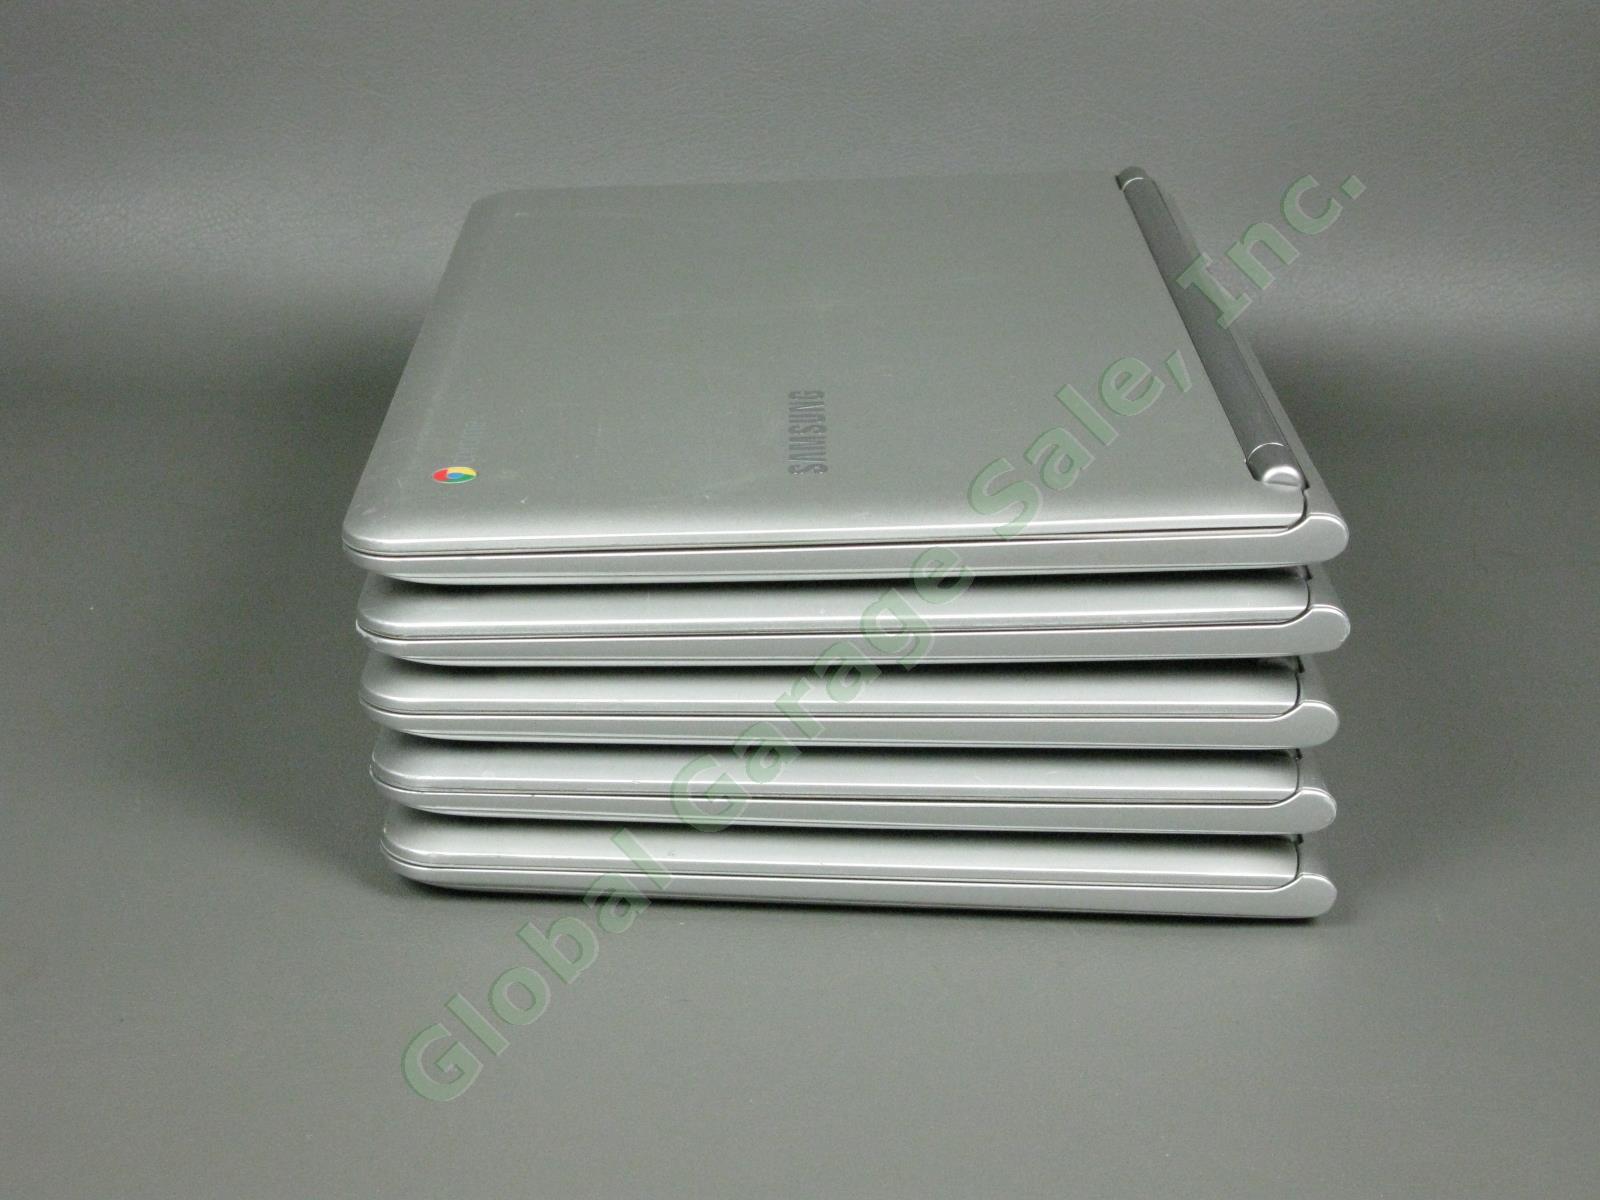 5 Samsung Chromebook 303C Laptop Computers Lot 11.6" 1.7GHz 2GB 16GB XE303C12 3